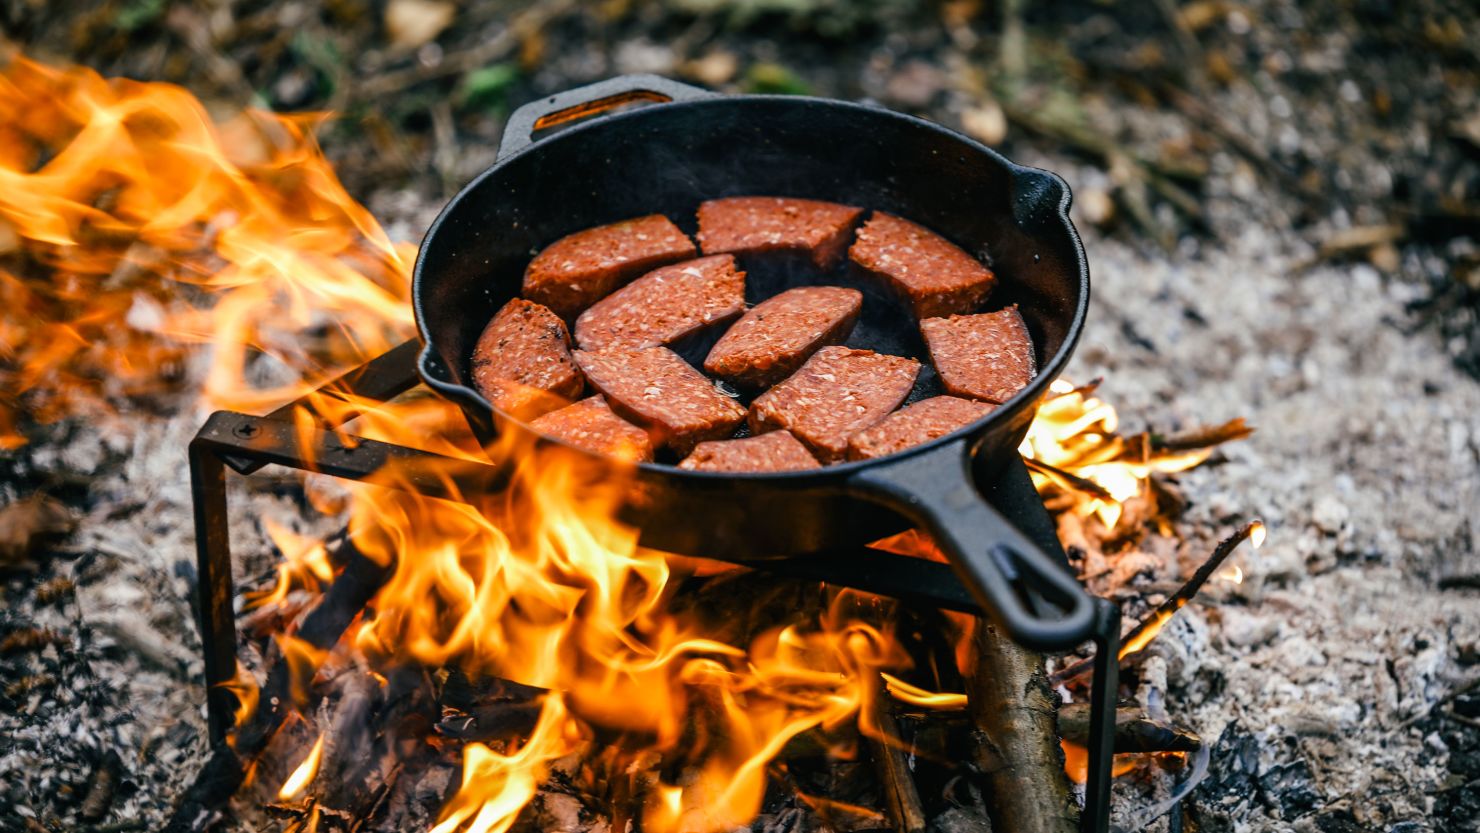 https://media.cnn.com/api/v1/images/stellar/prod/230627220825-01-summer-campfire-cooking-grill-recipe-wellness-restricted.jpg?c=16x9&q=h_833,w_1480,c_fill